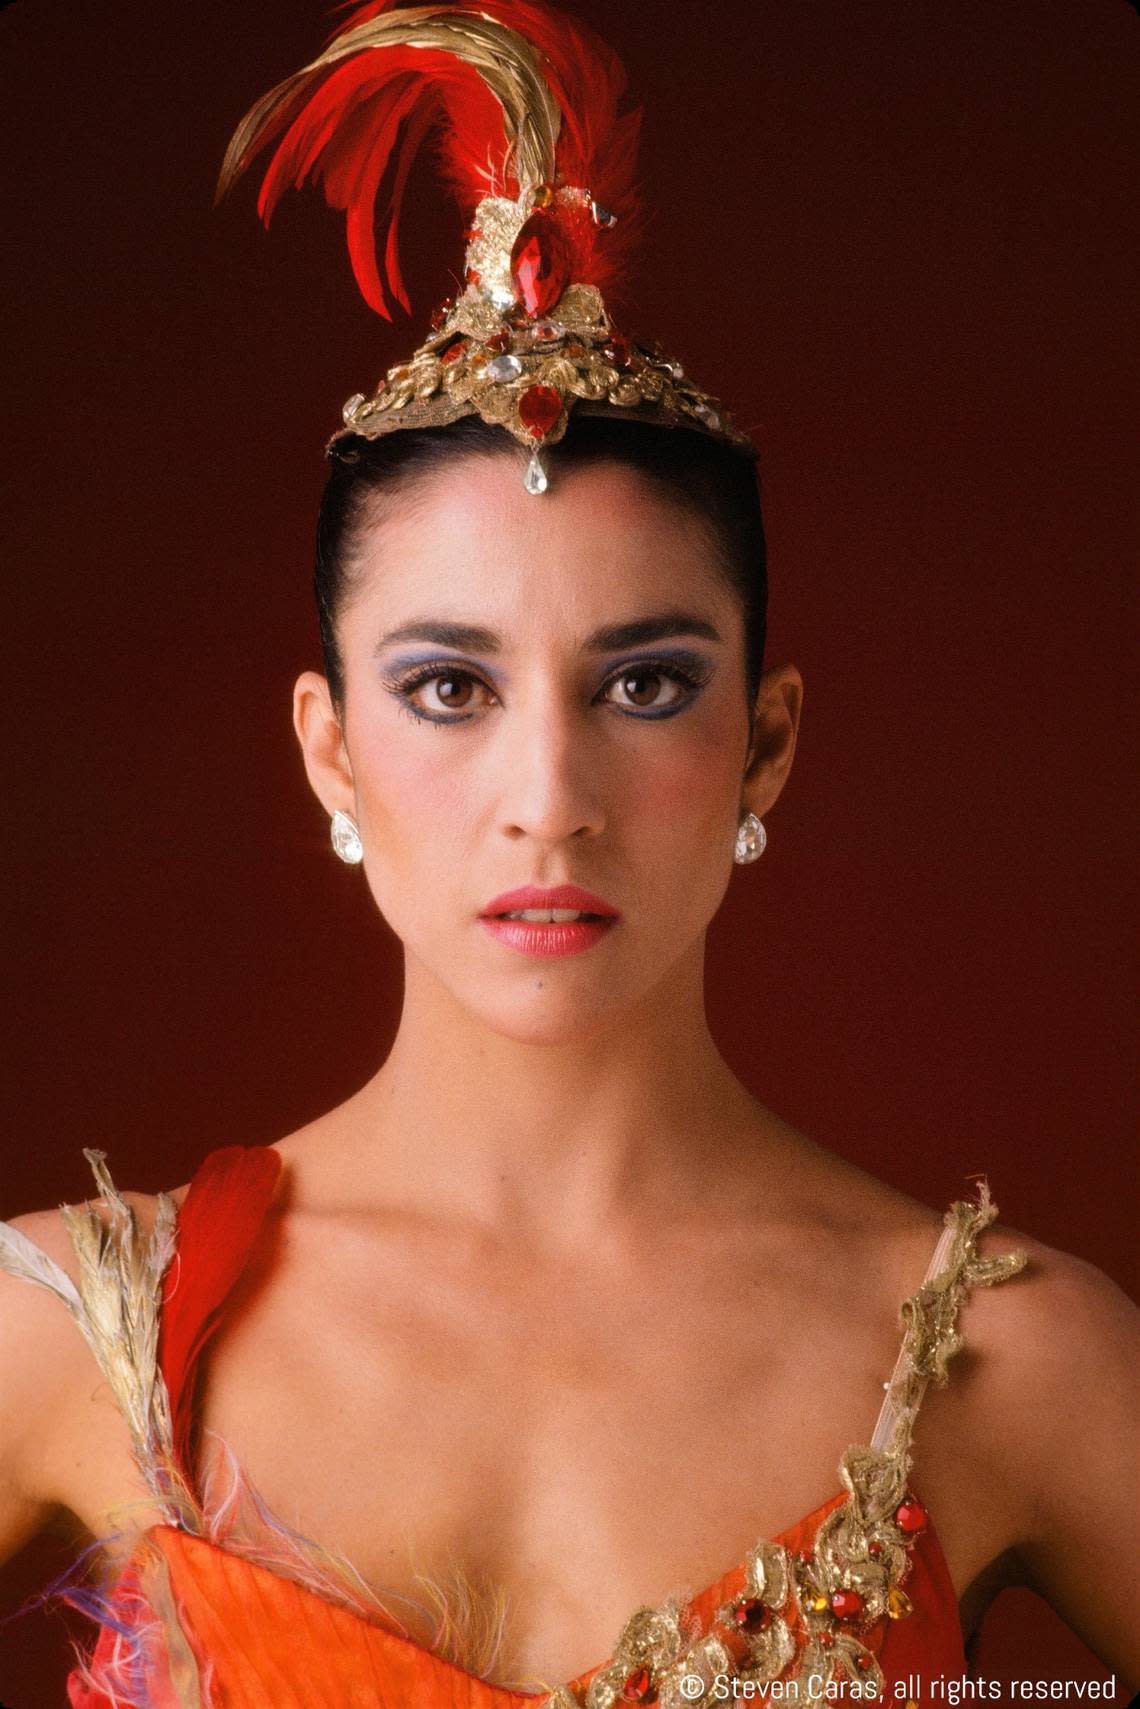 Lourdes López as the firebird in Balanchine/Robbins’ ”Firebird,” which Jennifer Dunning (The New York Times) called “magical” in 1995.